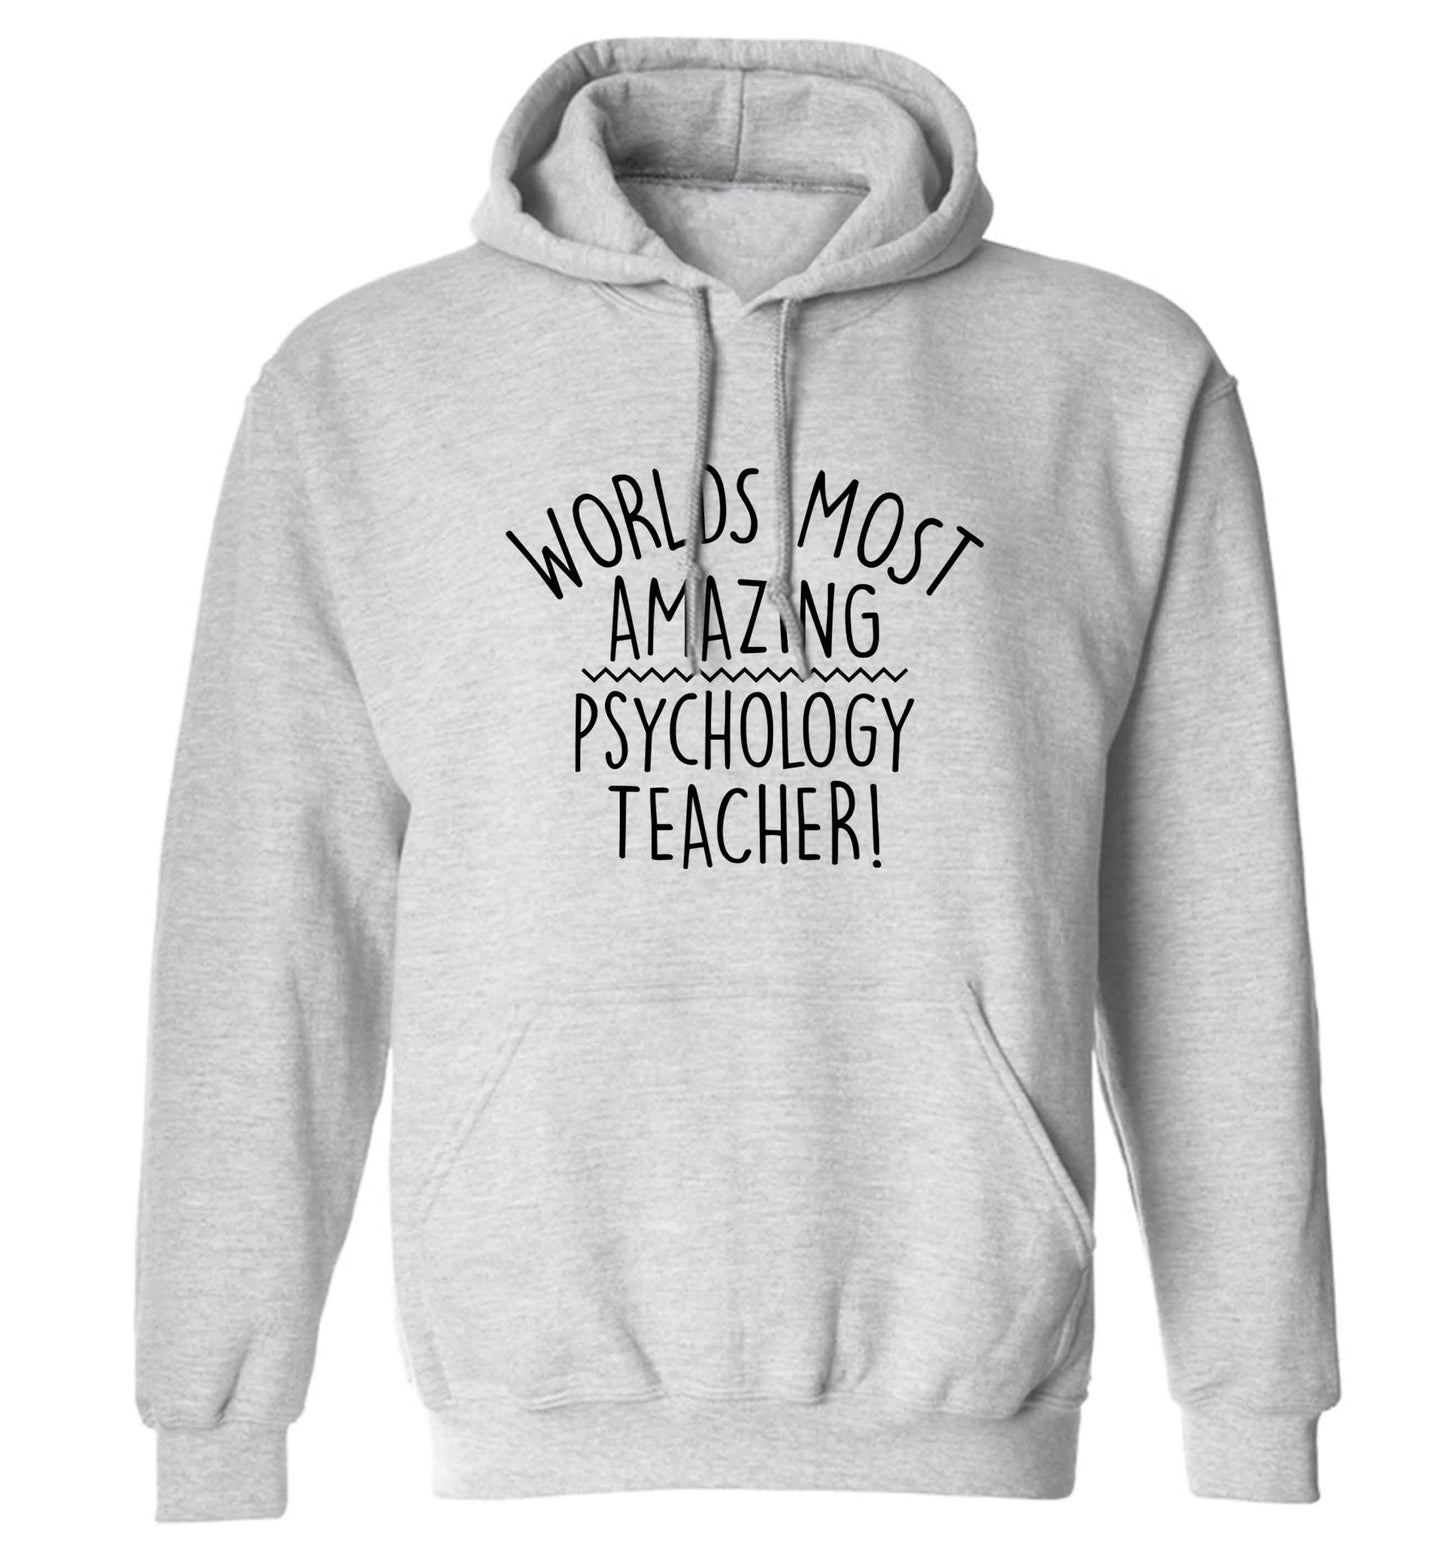 Worlds most amazing psychology teacher adults unisex grey hoodie 2XL